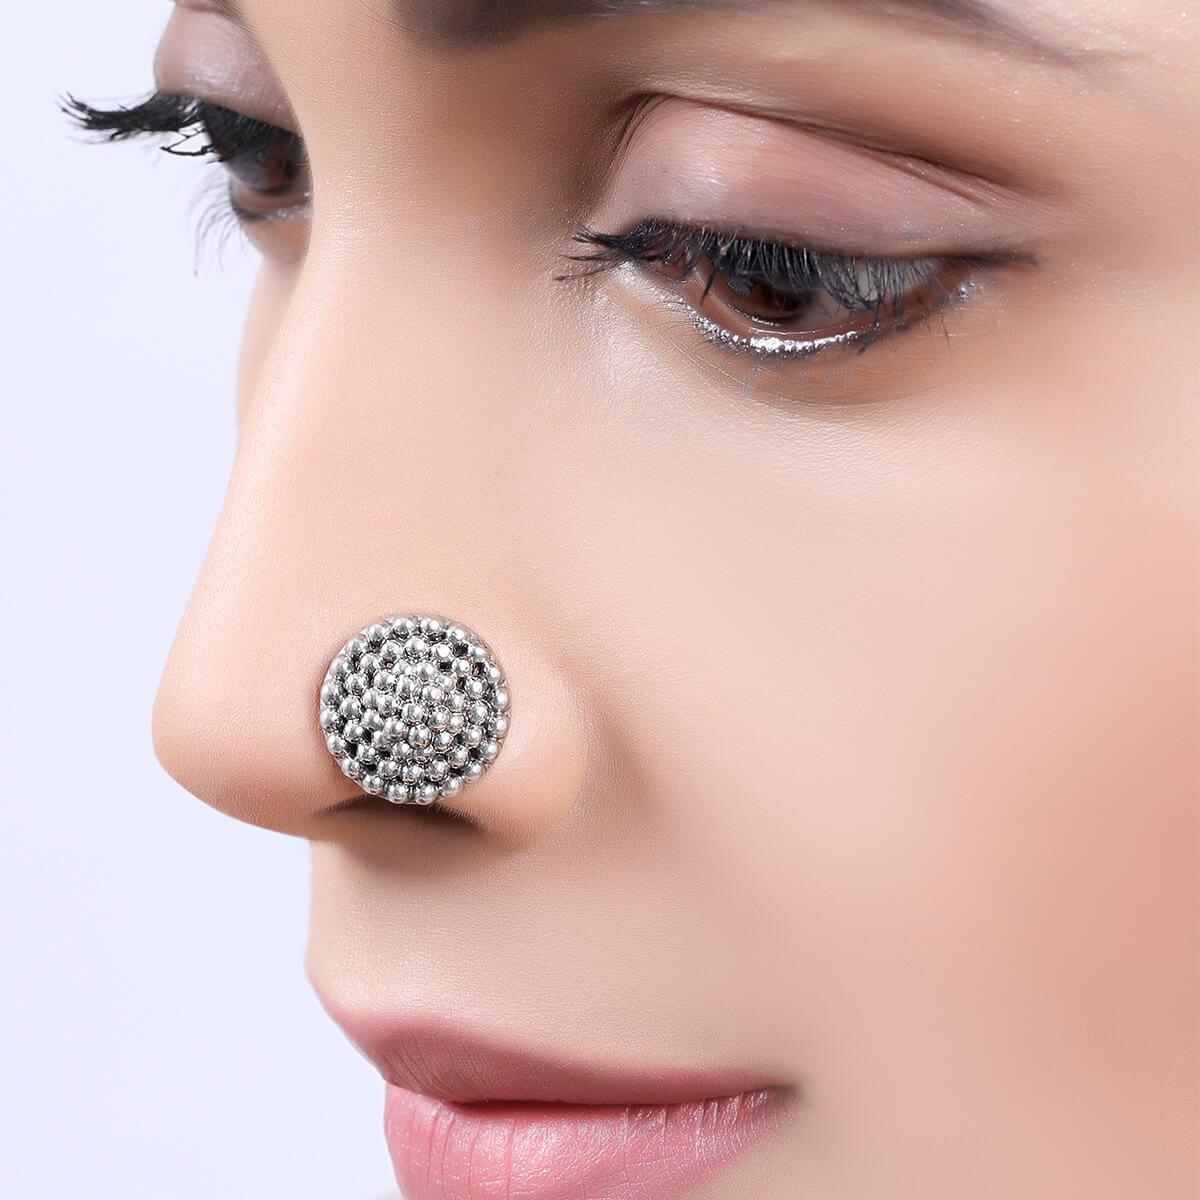 Pure Silver Nose Ring 🤩 Only - $6.95 😍 #roopdarshan #christmasshoppi... |  TikTok